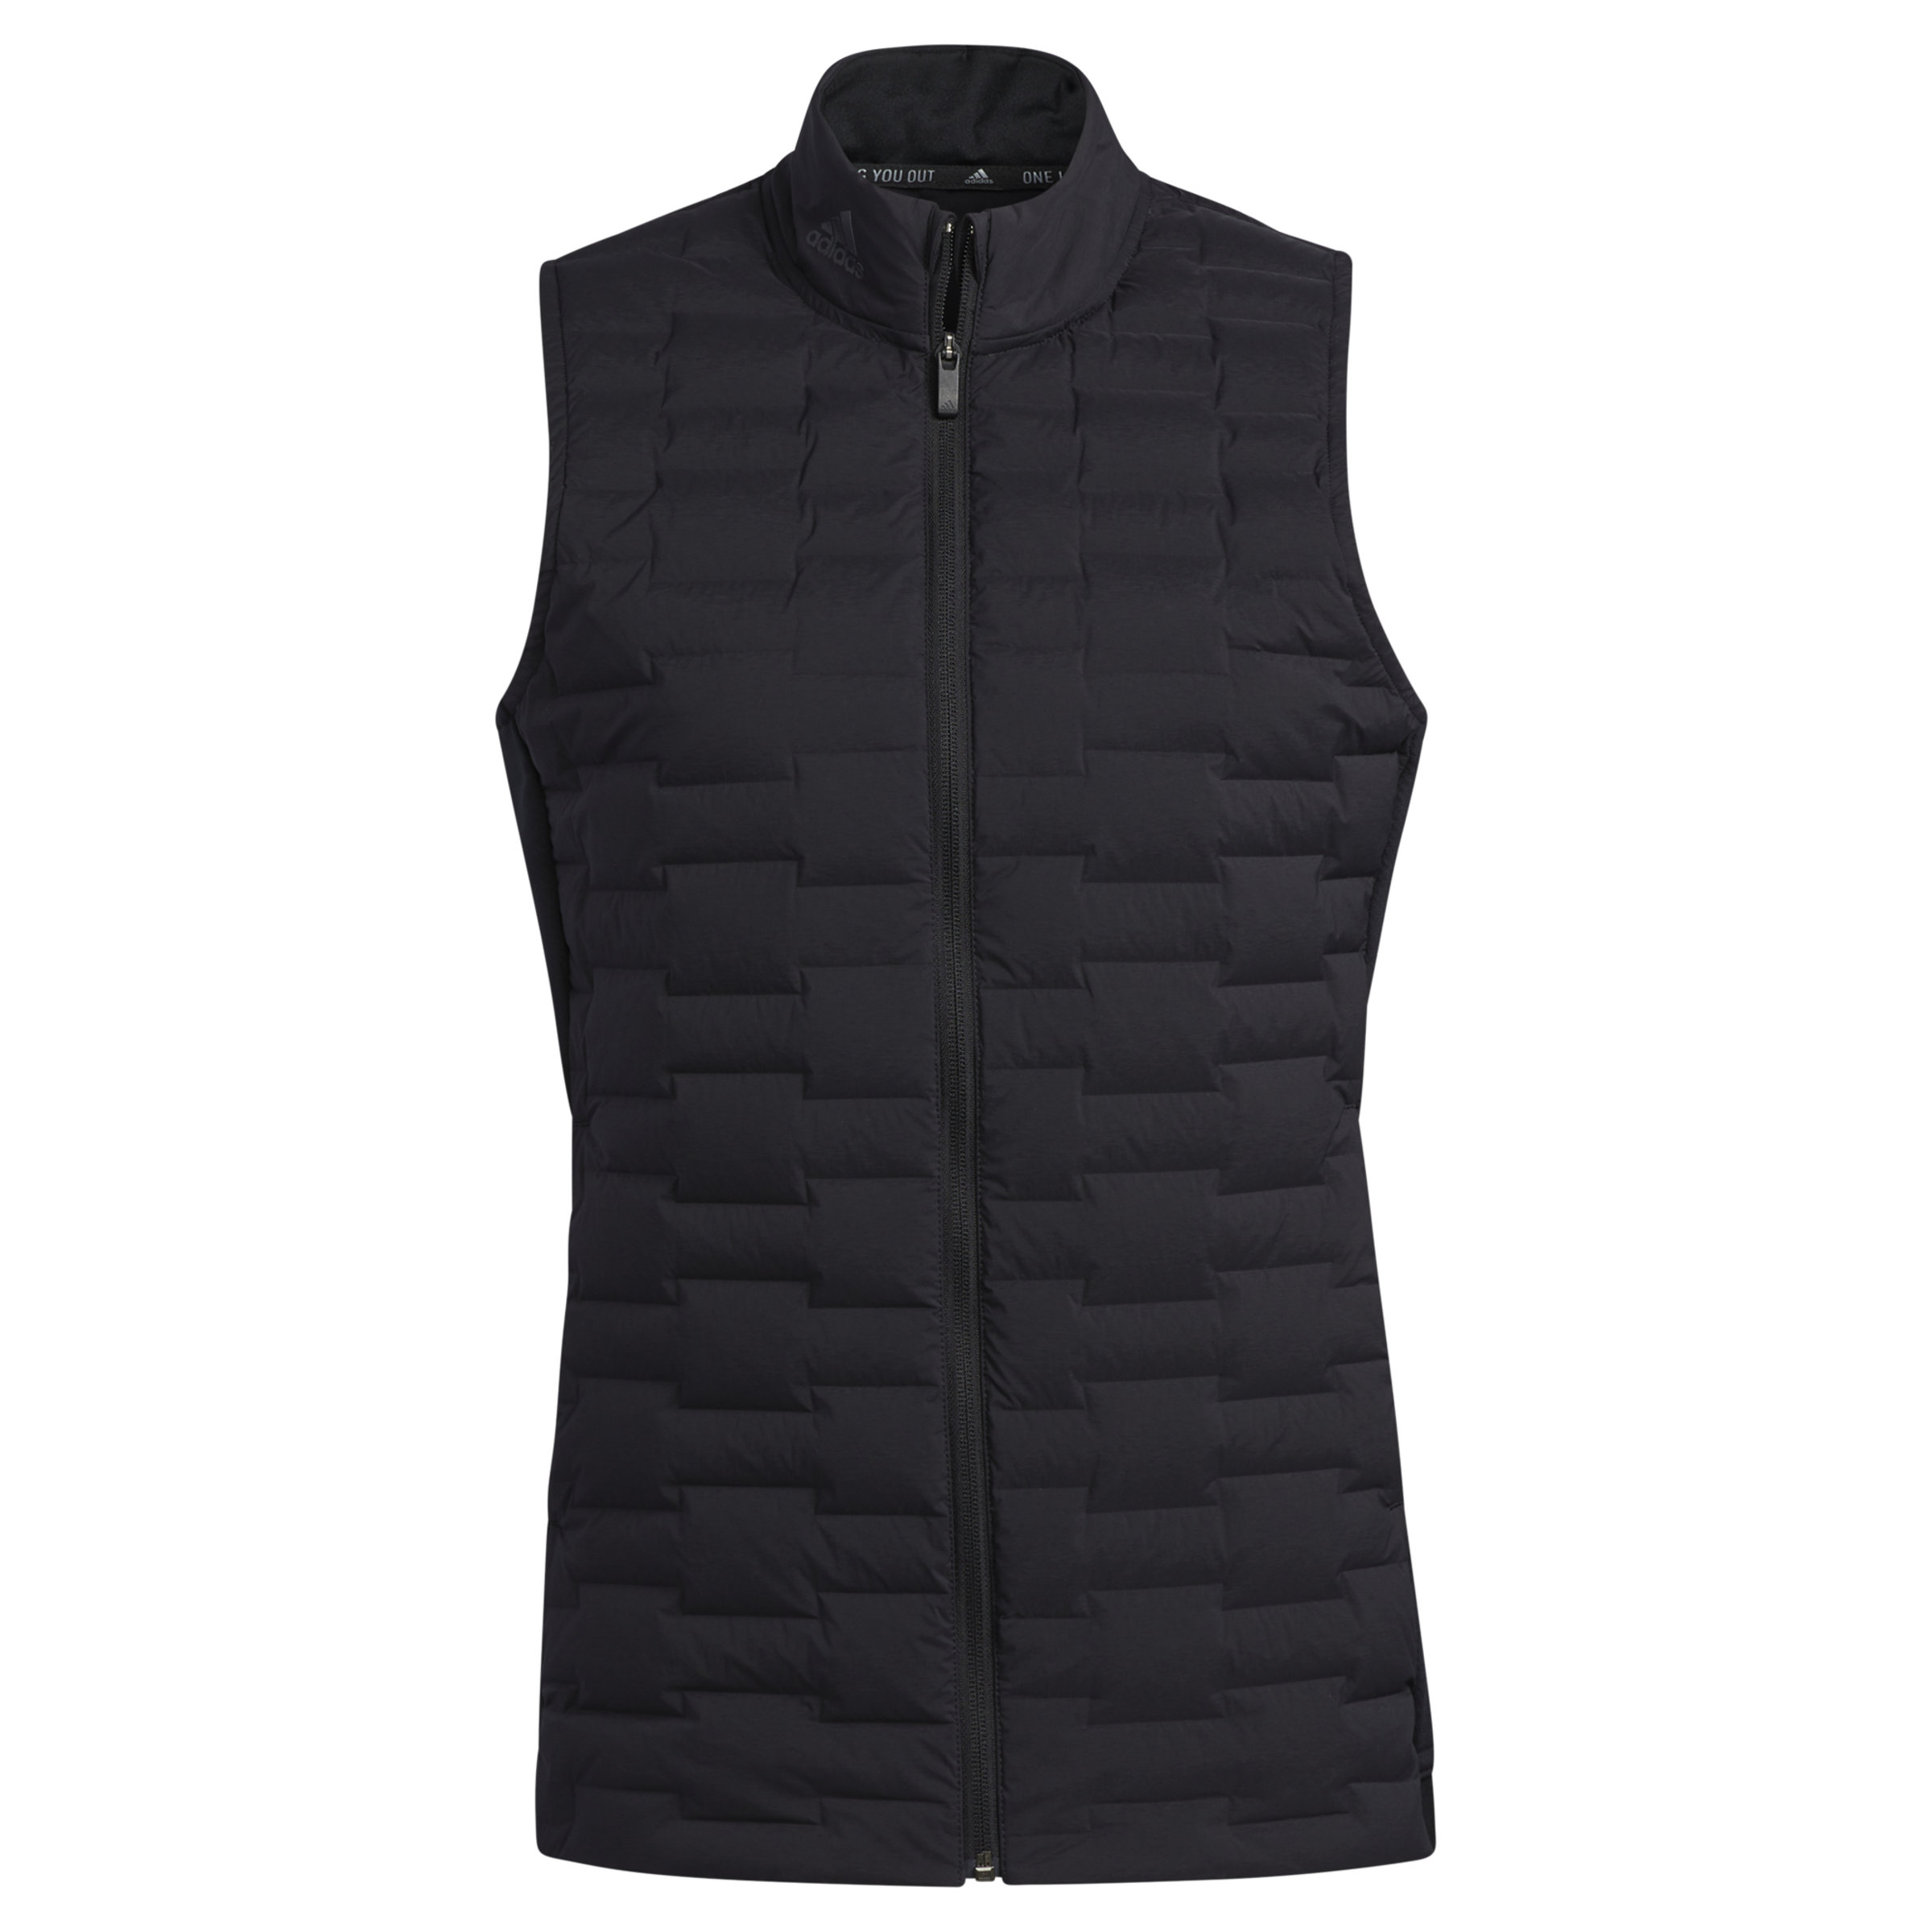 Adidas Ladies Frostguard Vest Black